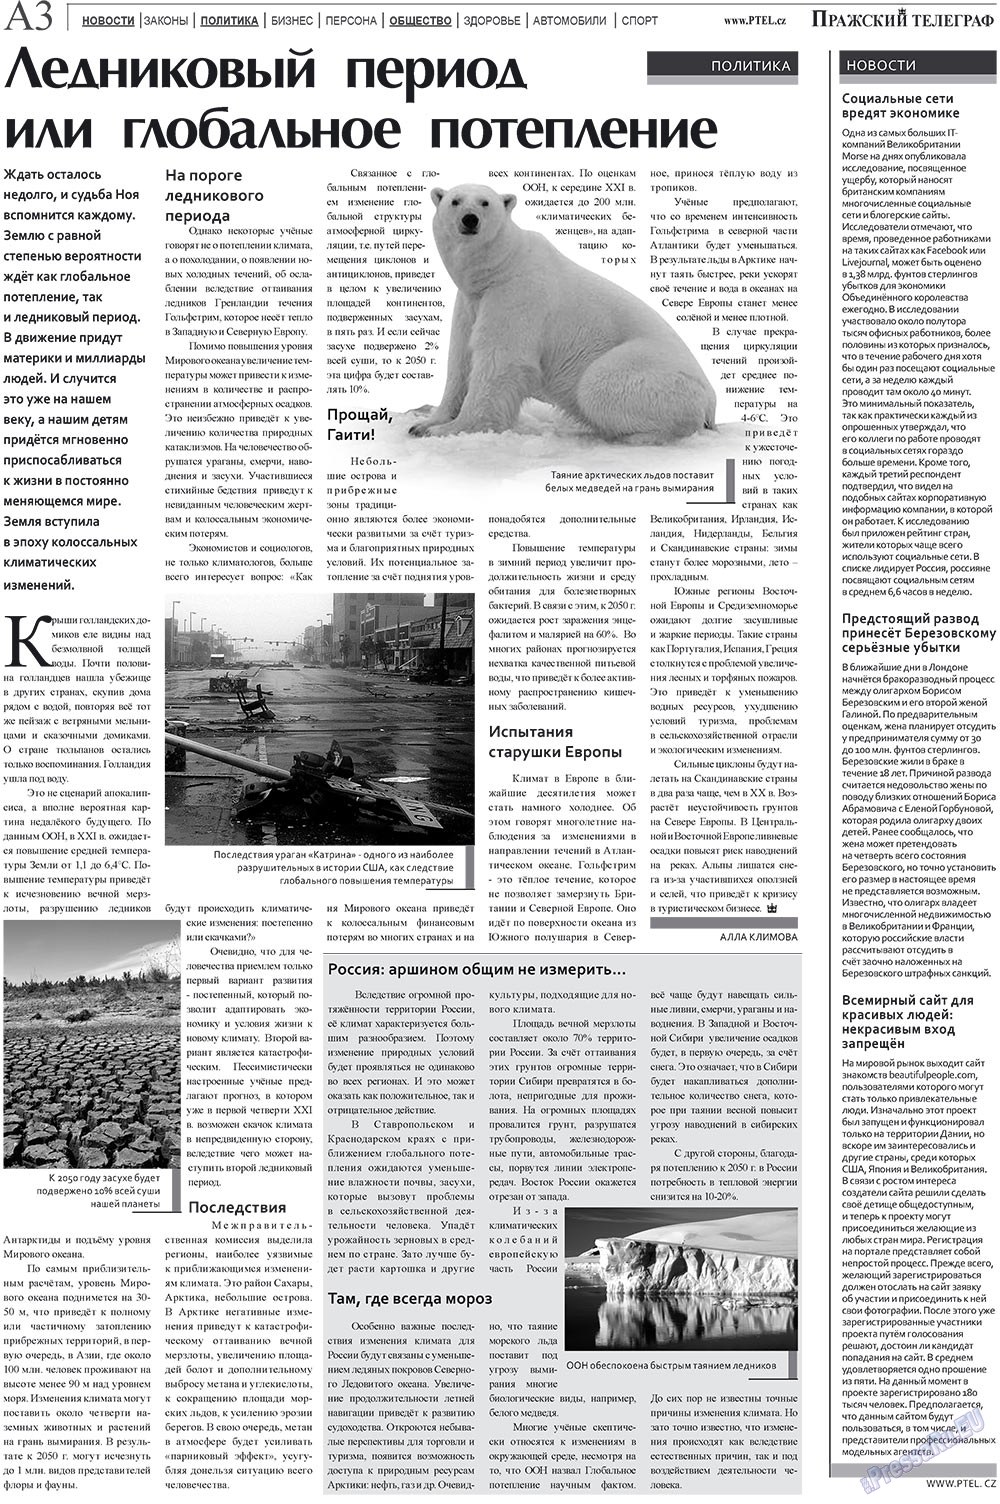 Пражский телеграф, газета. 2009 №28 стр.3